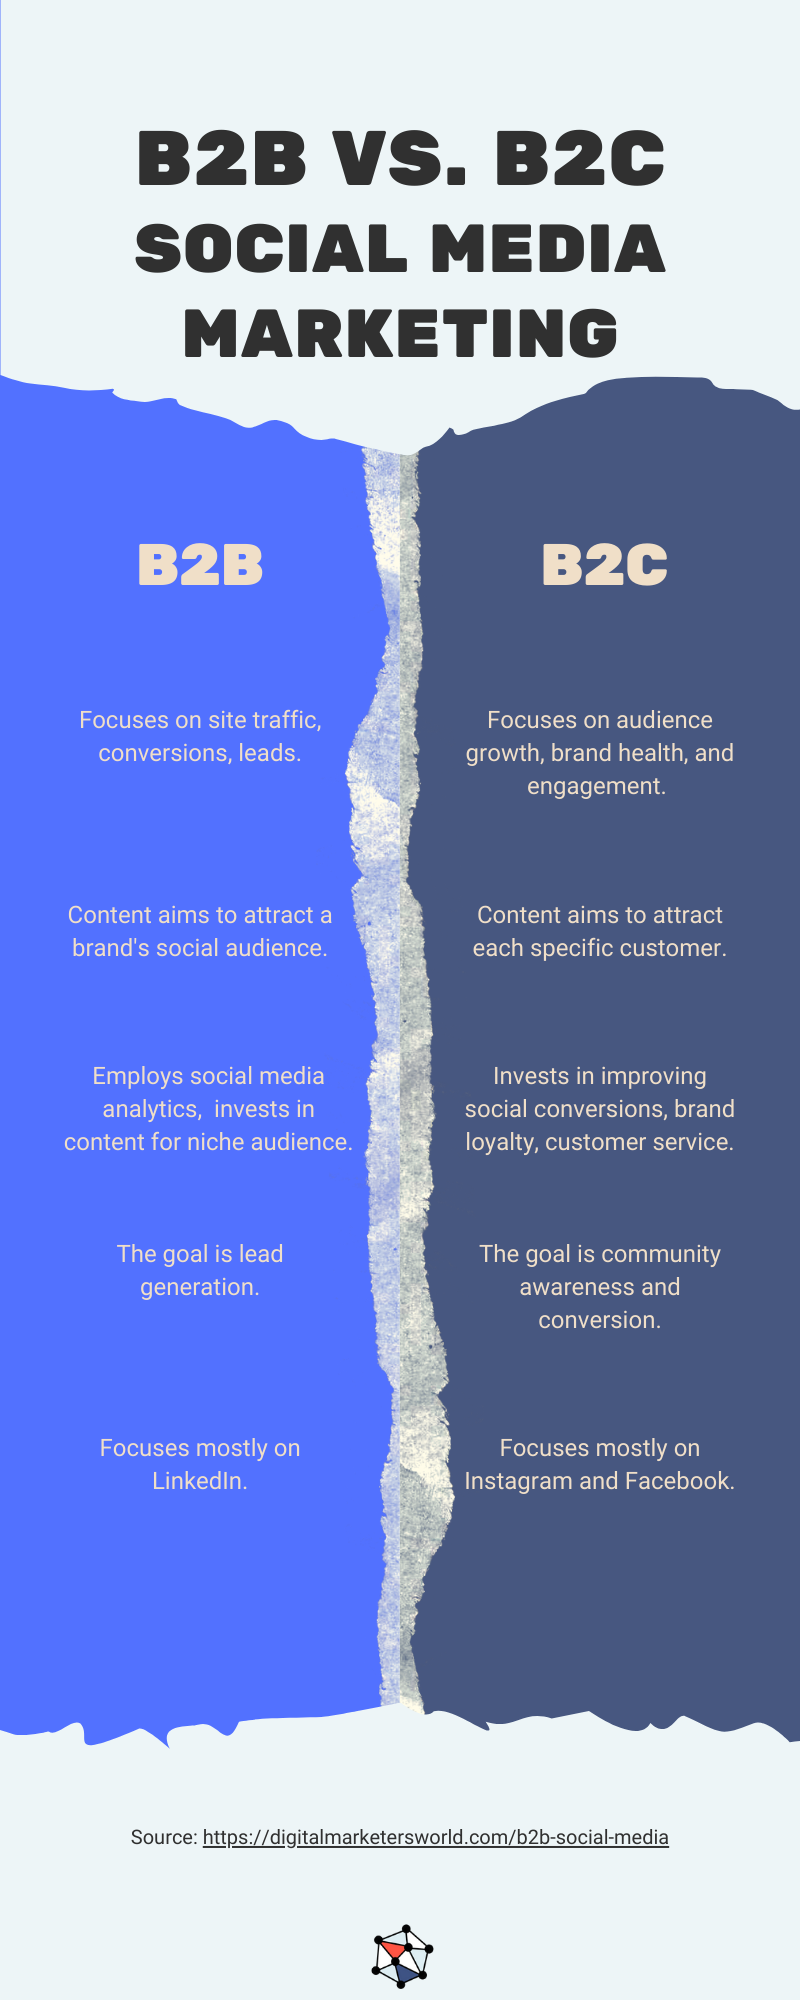 B2B vs. B2C Social Media Marketing Differences - Digital Marketer's World